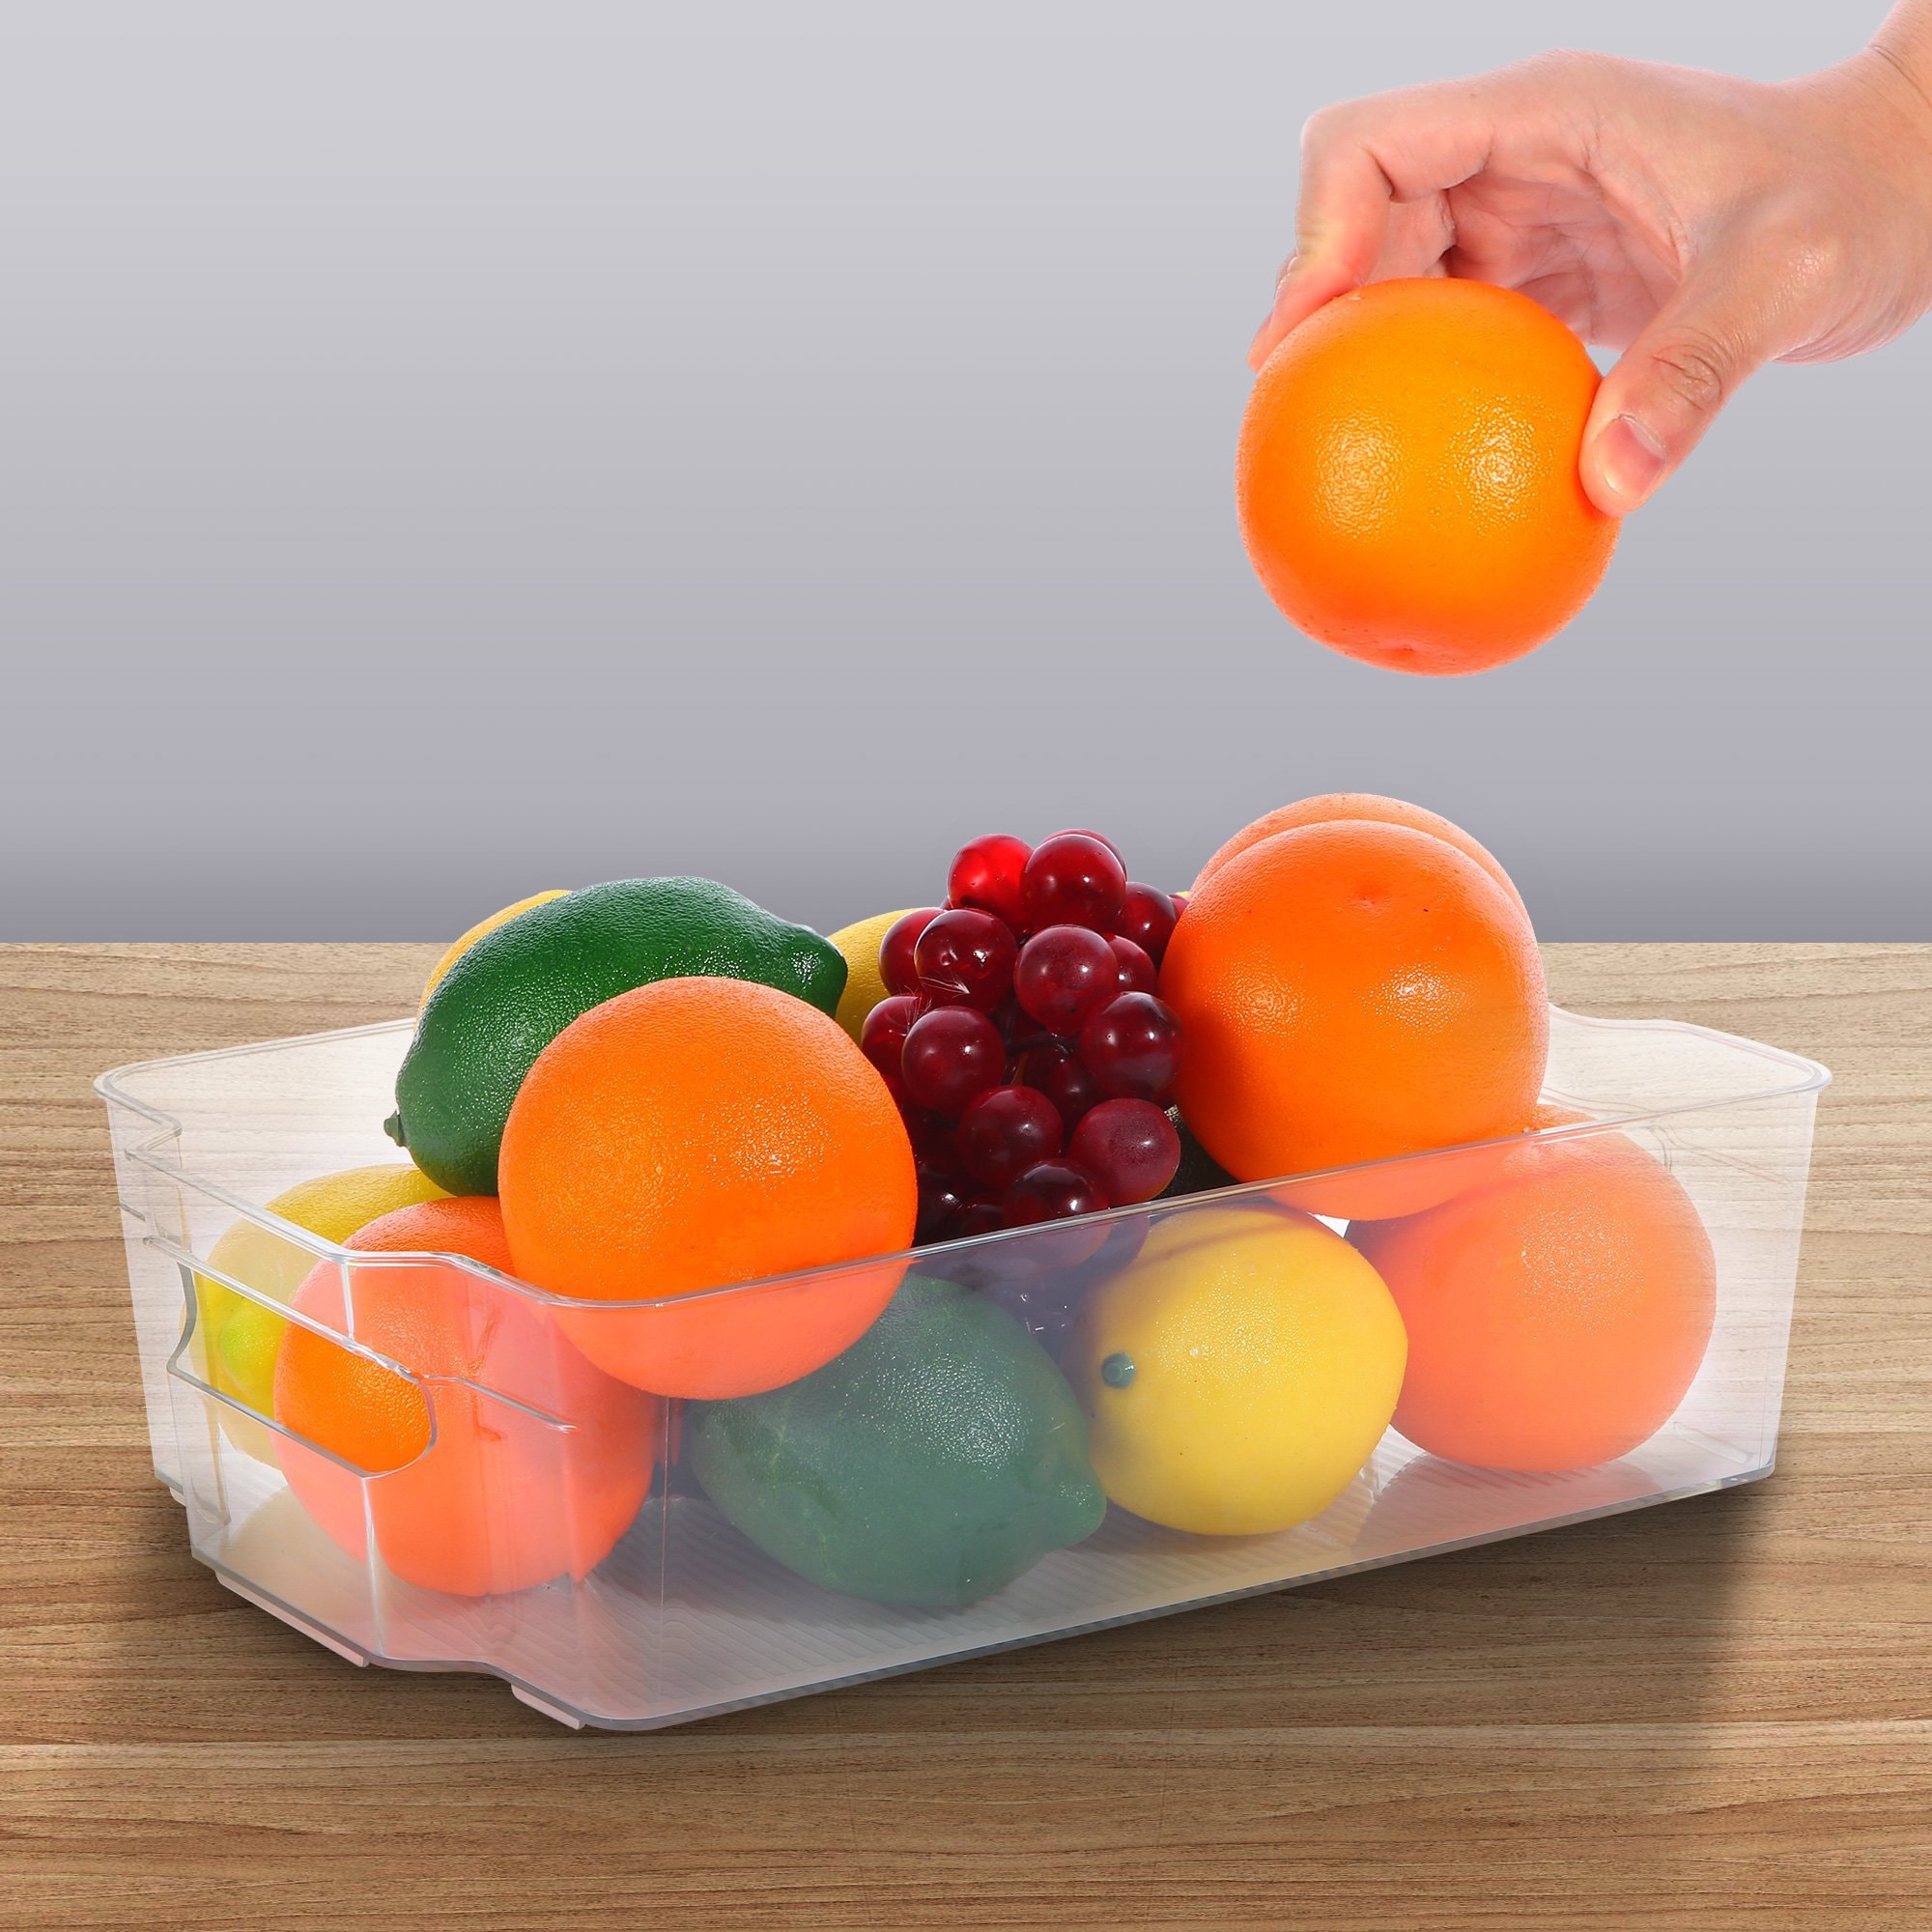 ROSELIFE 蔬菜水果分类厨房冰箱收纳盒12.6"x8.6"x3.5"